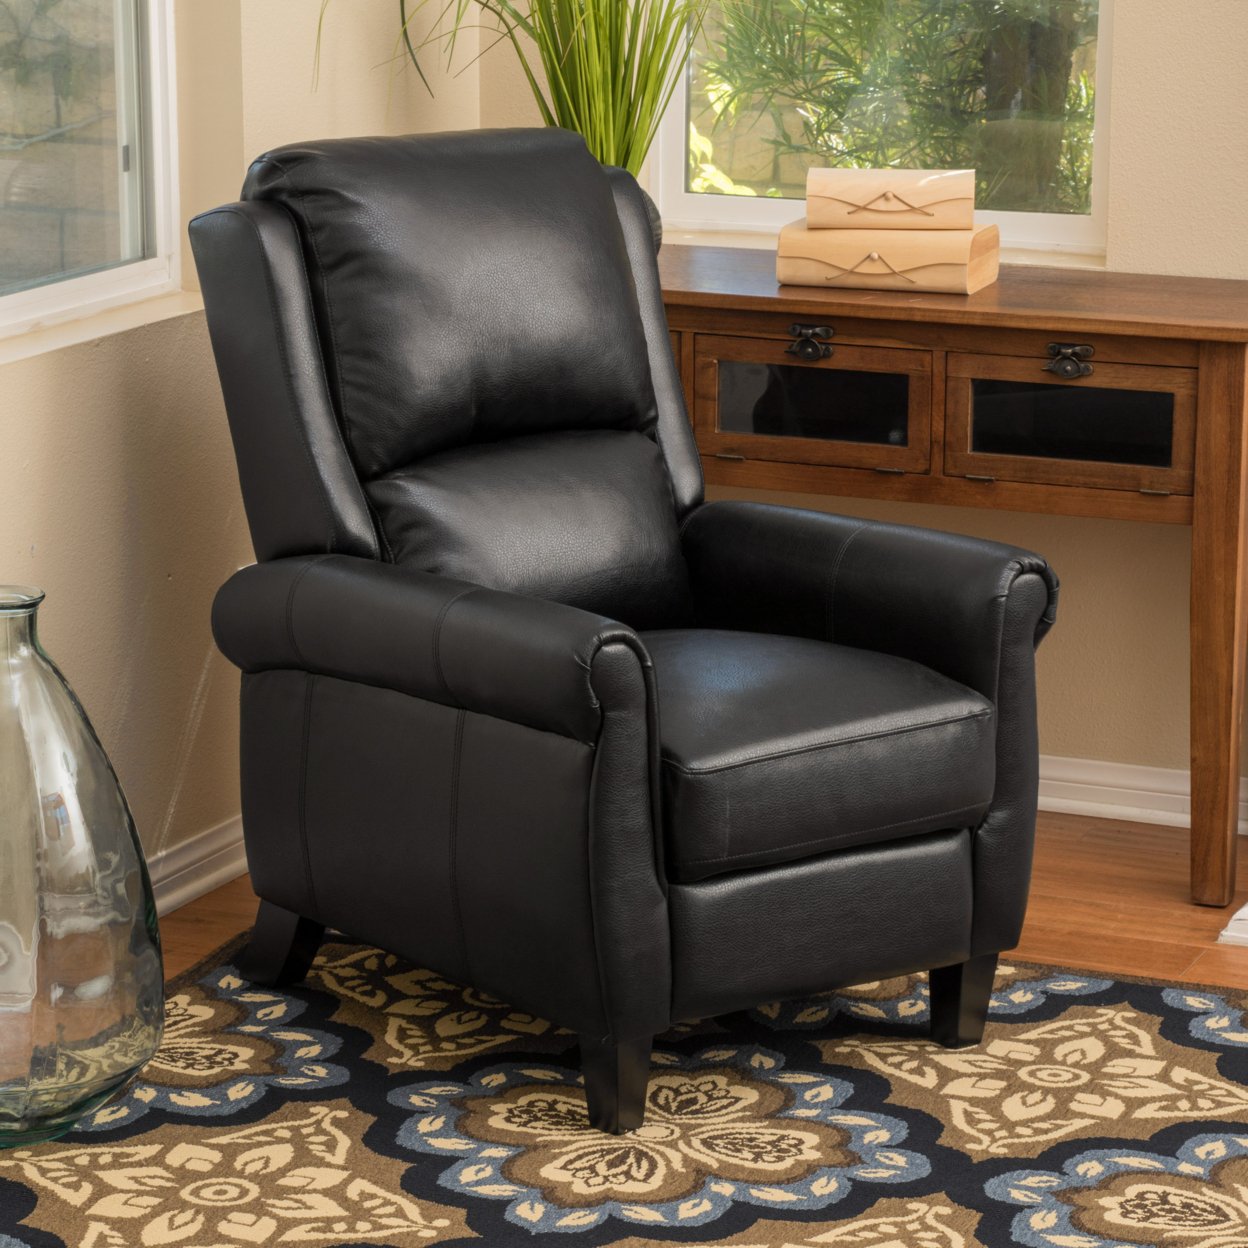 Memphis PU Leather Recliner Club Chair - Black